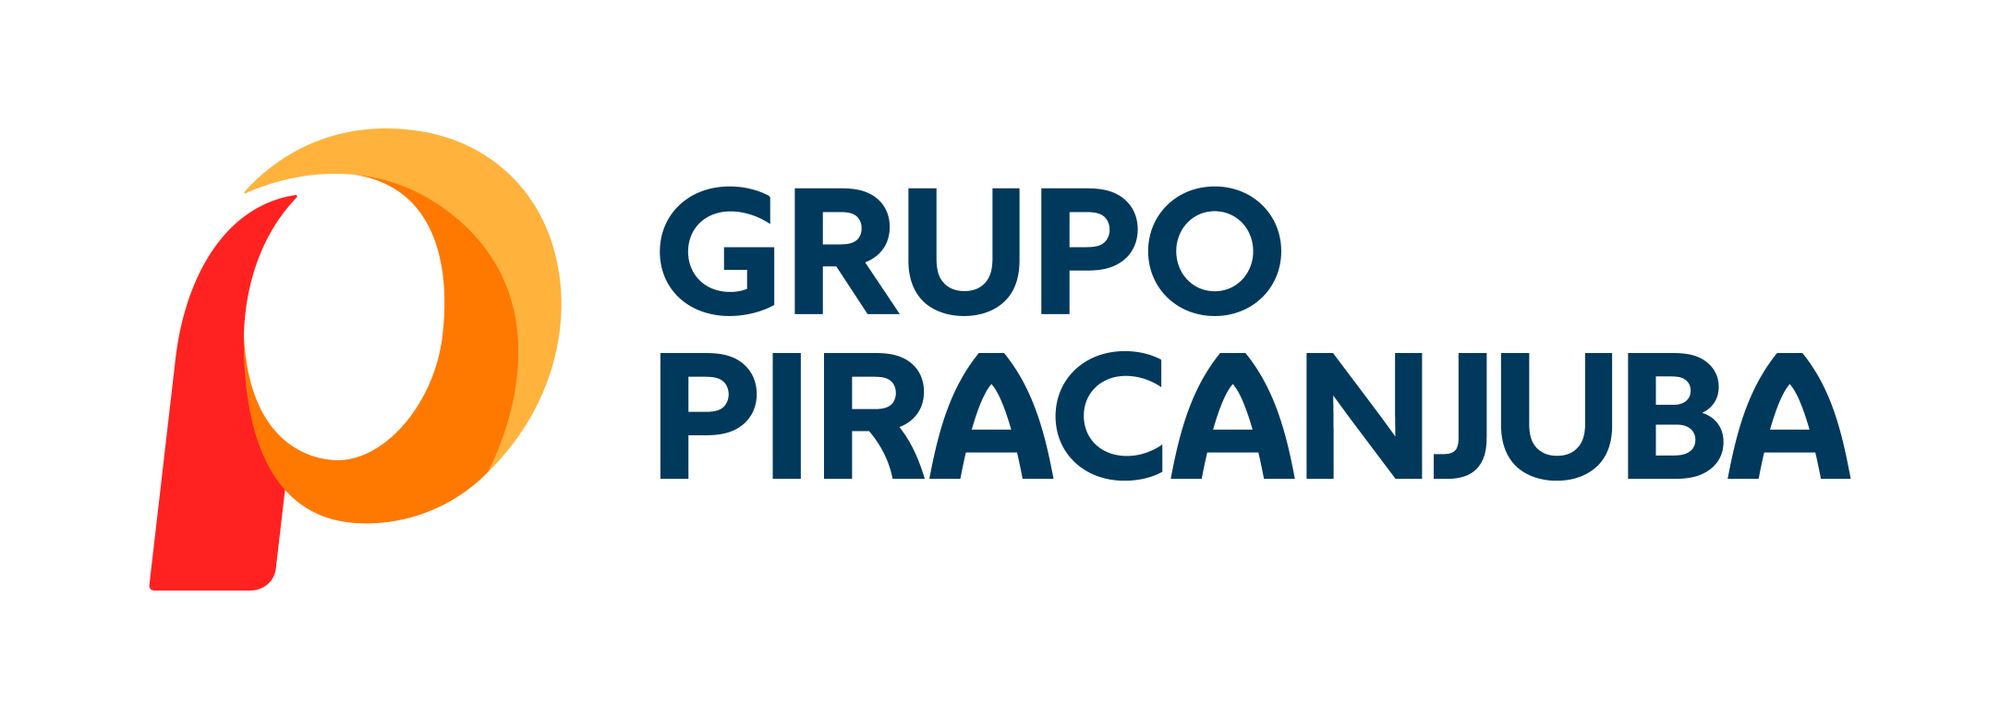 Grupo-Piracanjuba